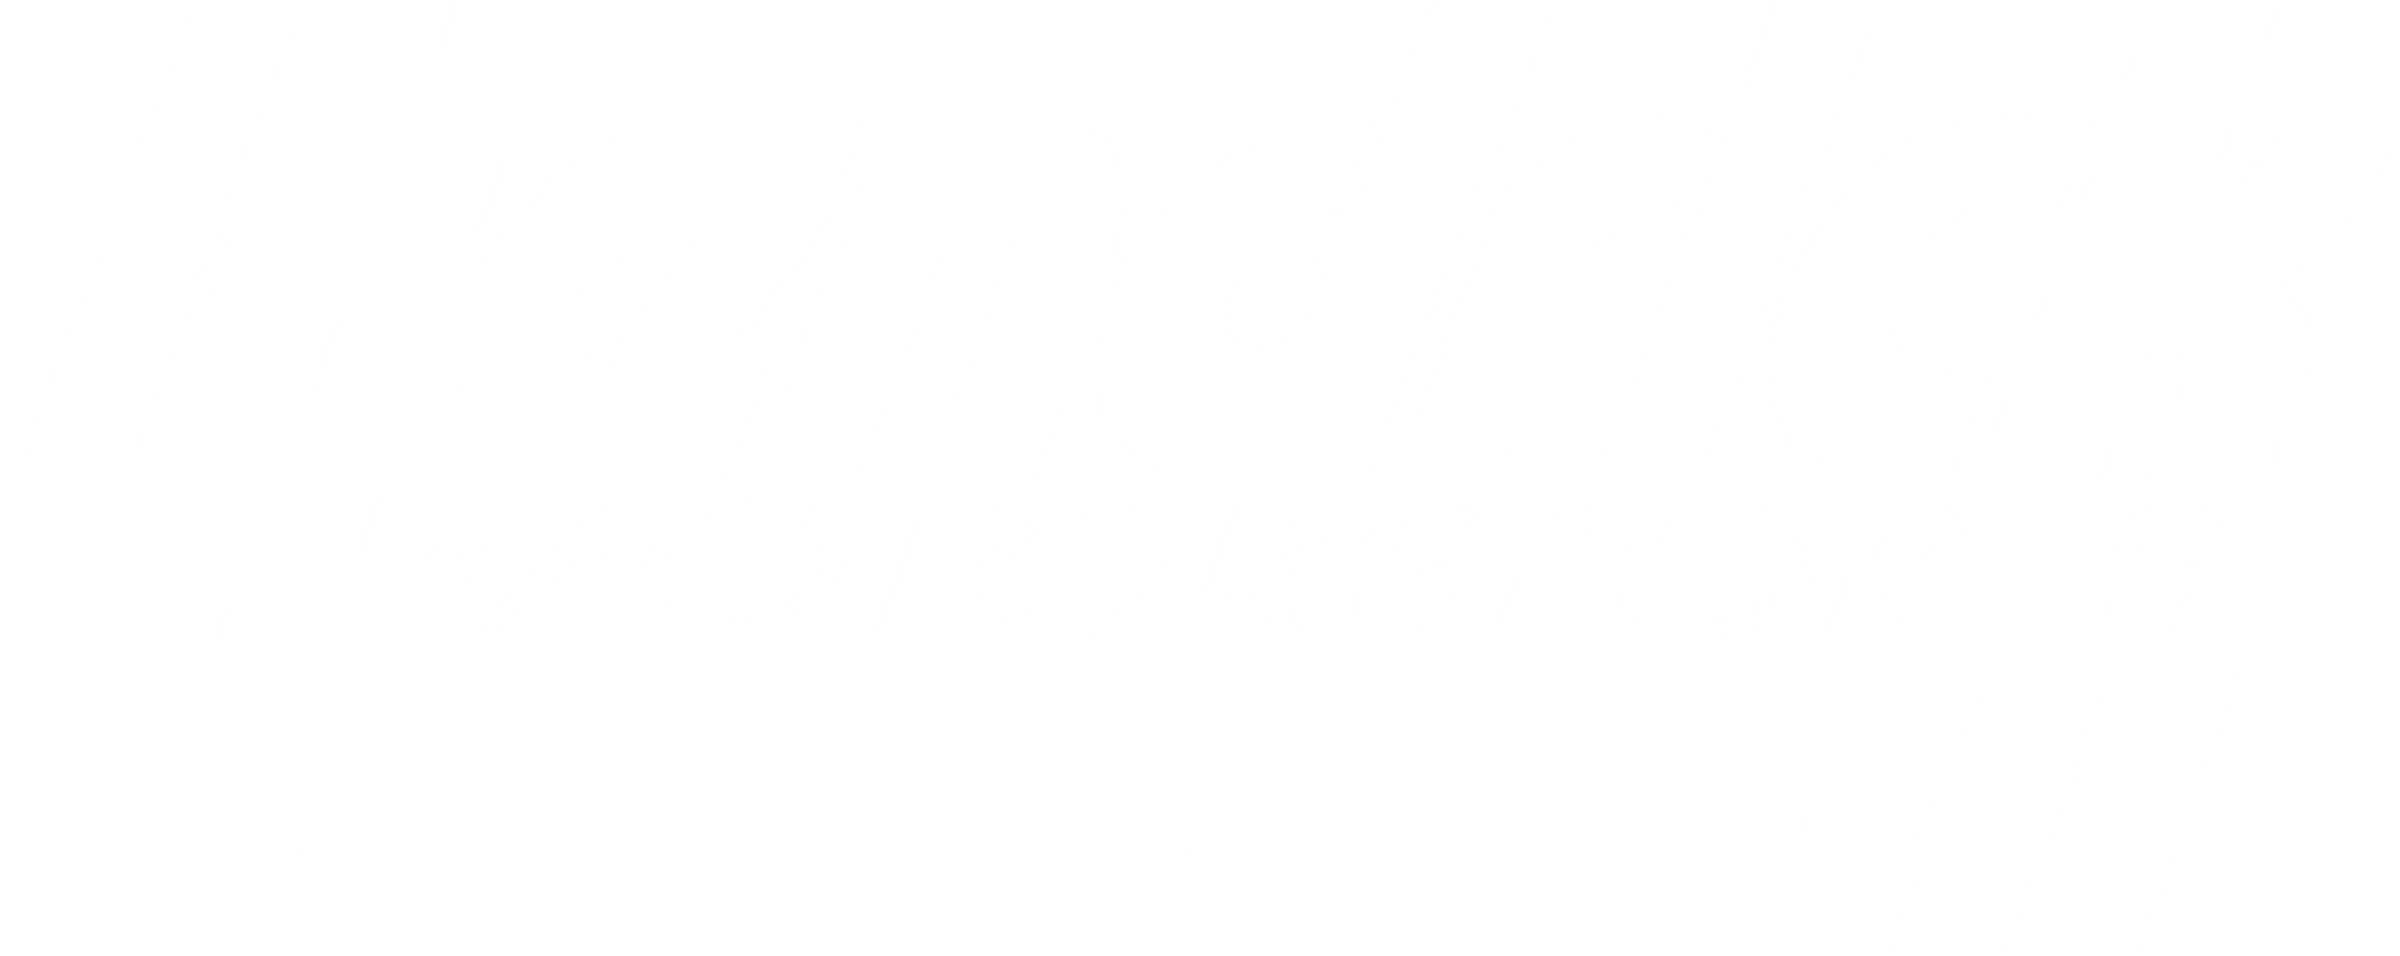 Hendrick Motorsports Logo Vector at Vectorified.com | Collection of